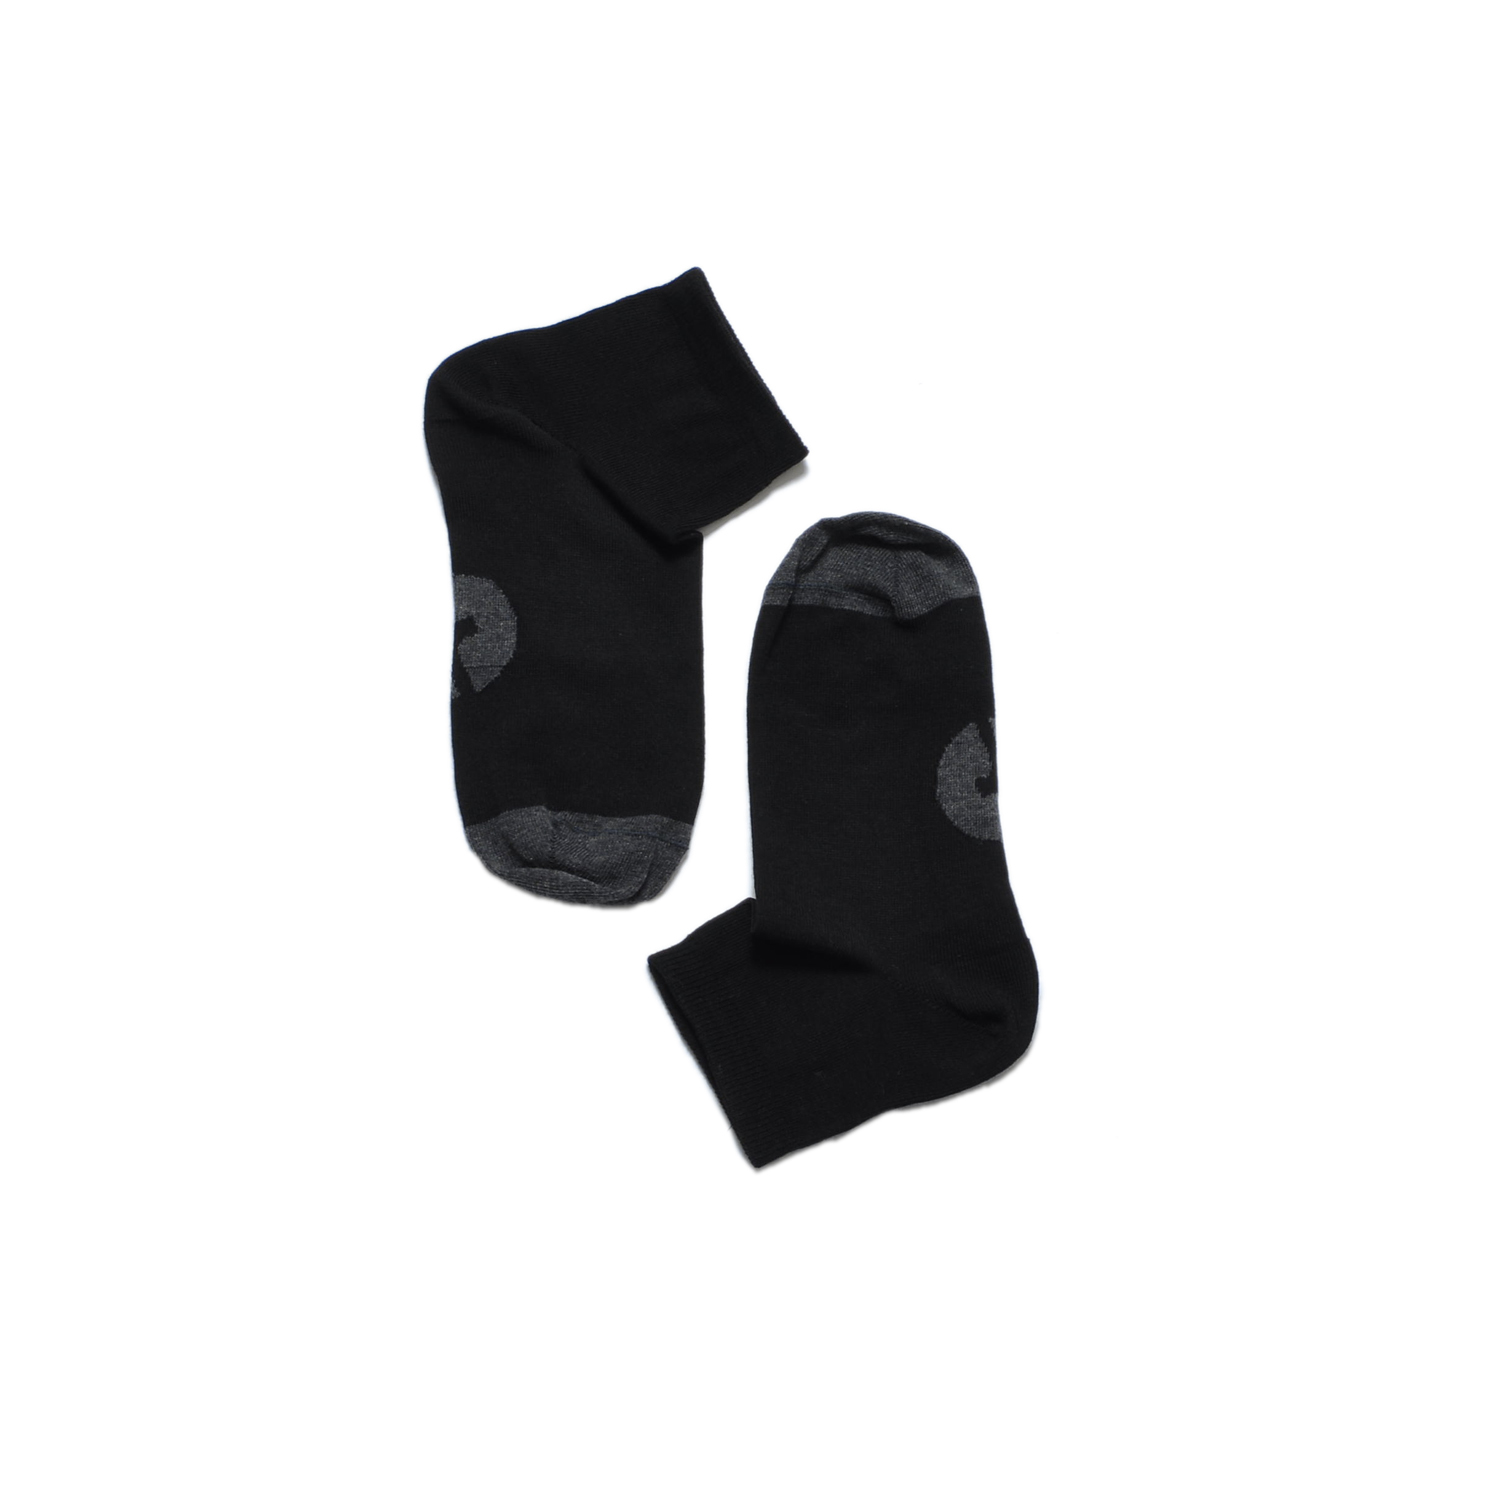 Tisza shoes - Socks - Black-grey